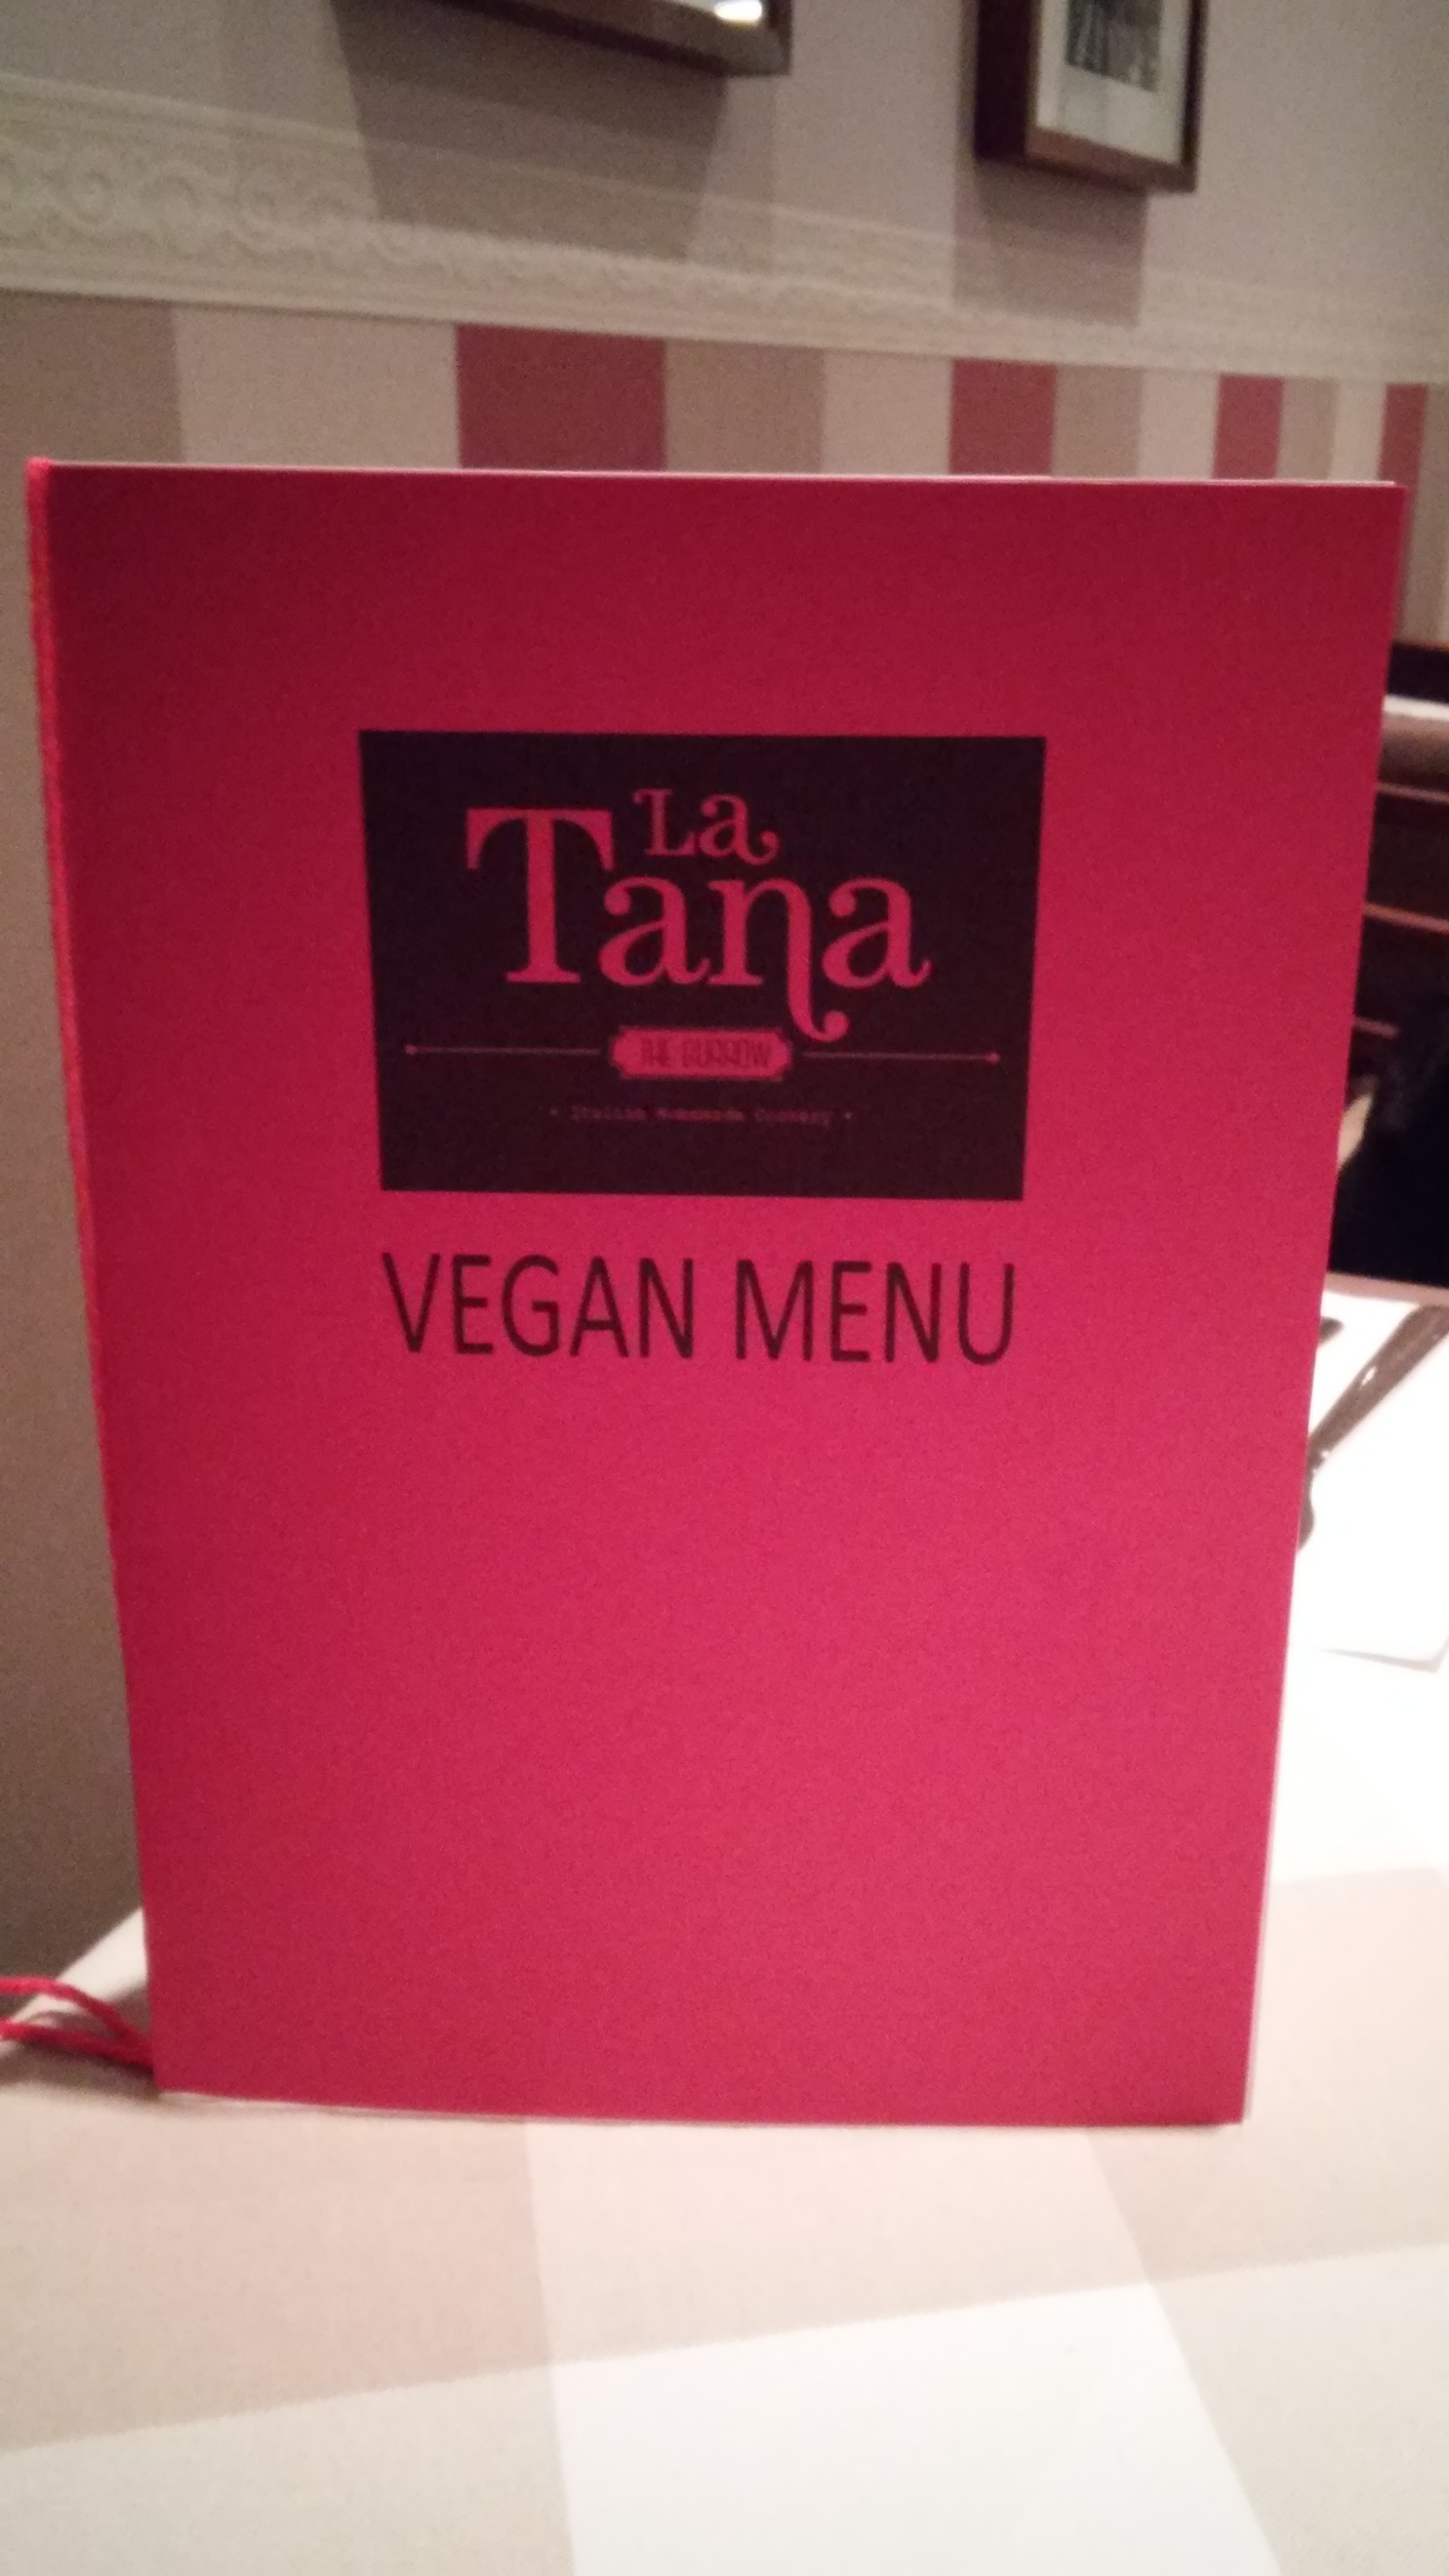 La Tana - vegan menu (1).jpg